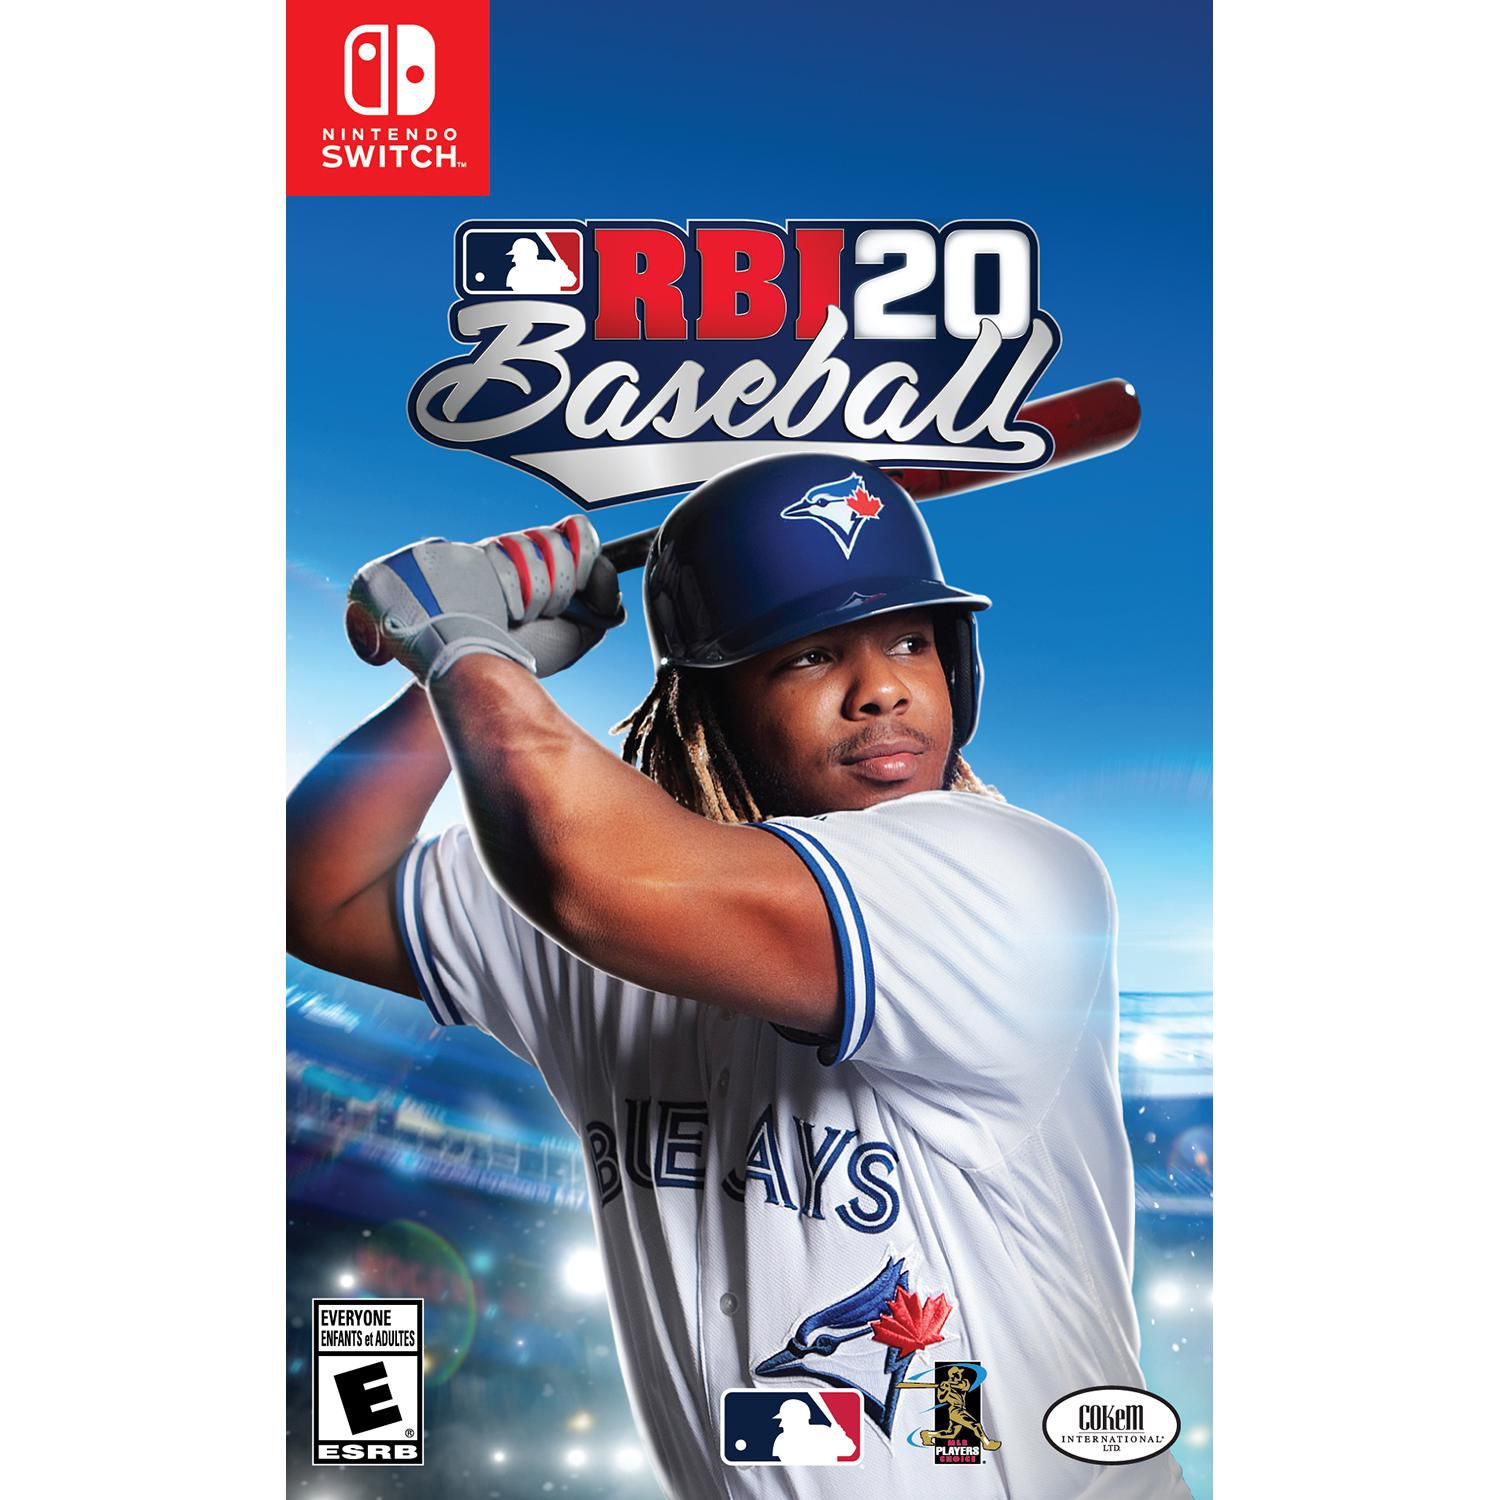 MLB R.B.I. 20 Baseball (Nintendo Switch) Walmart Canada